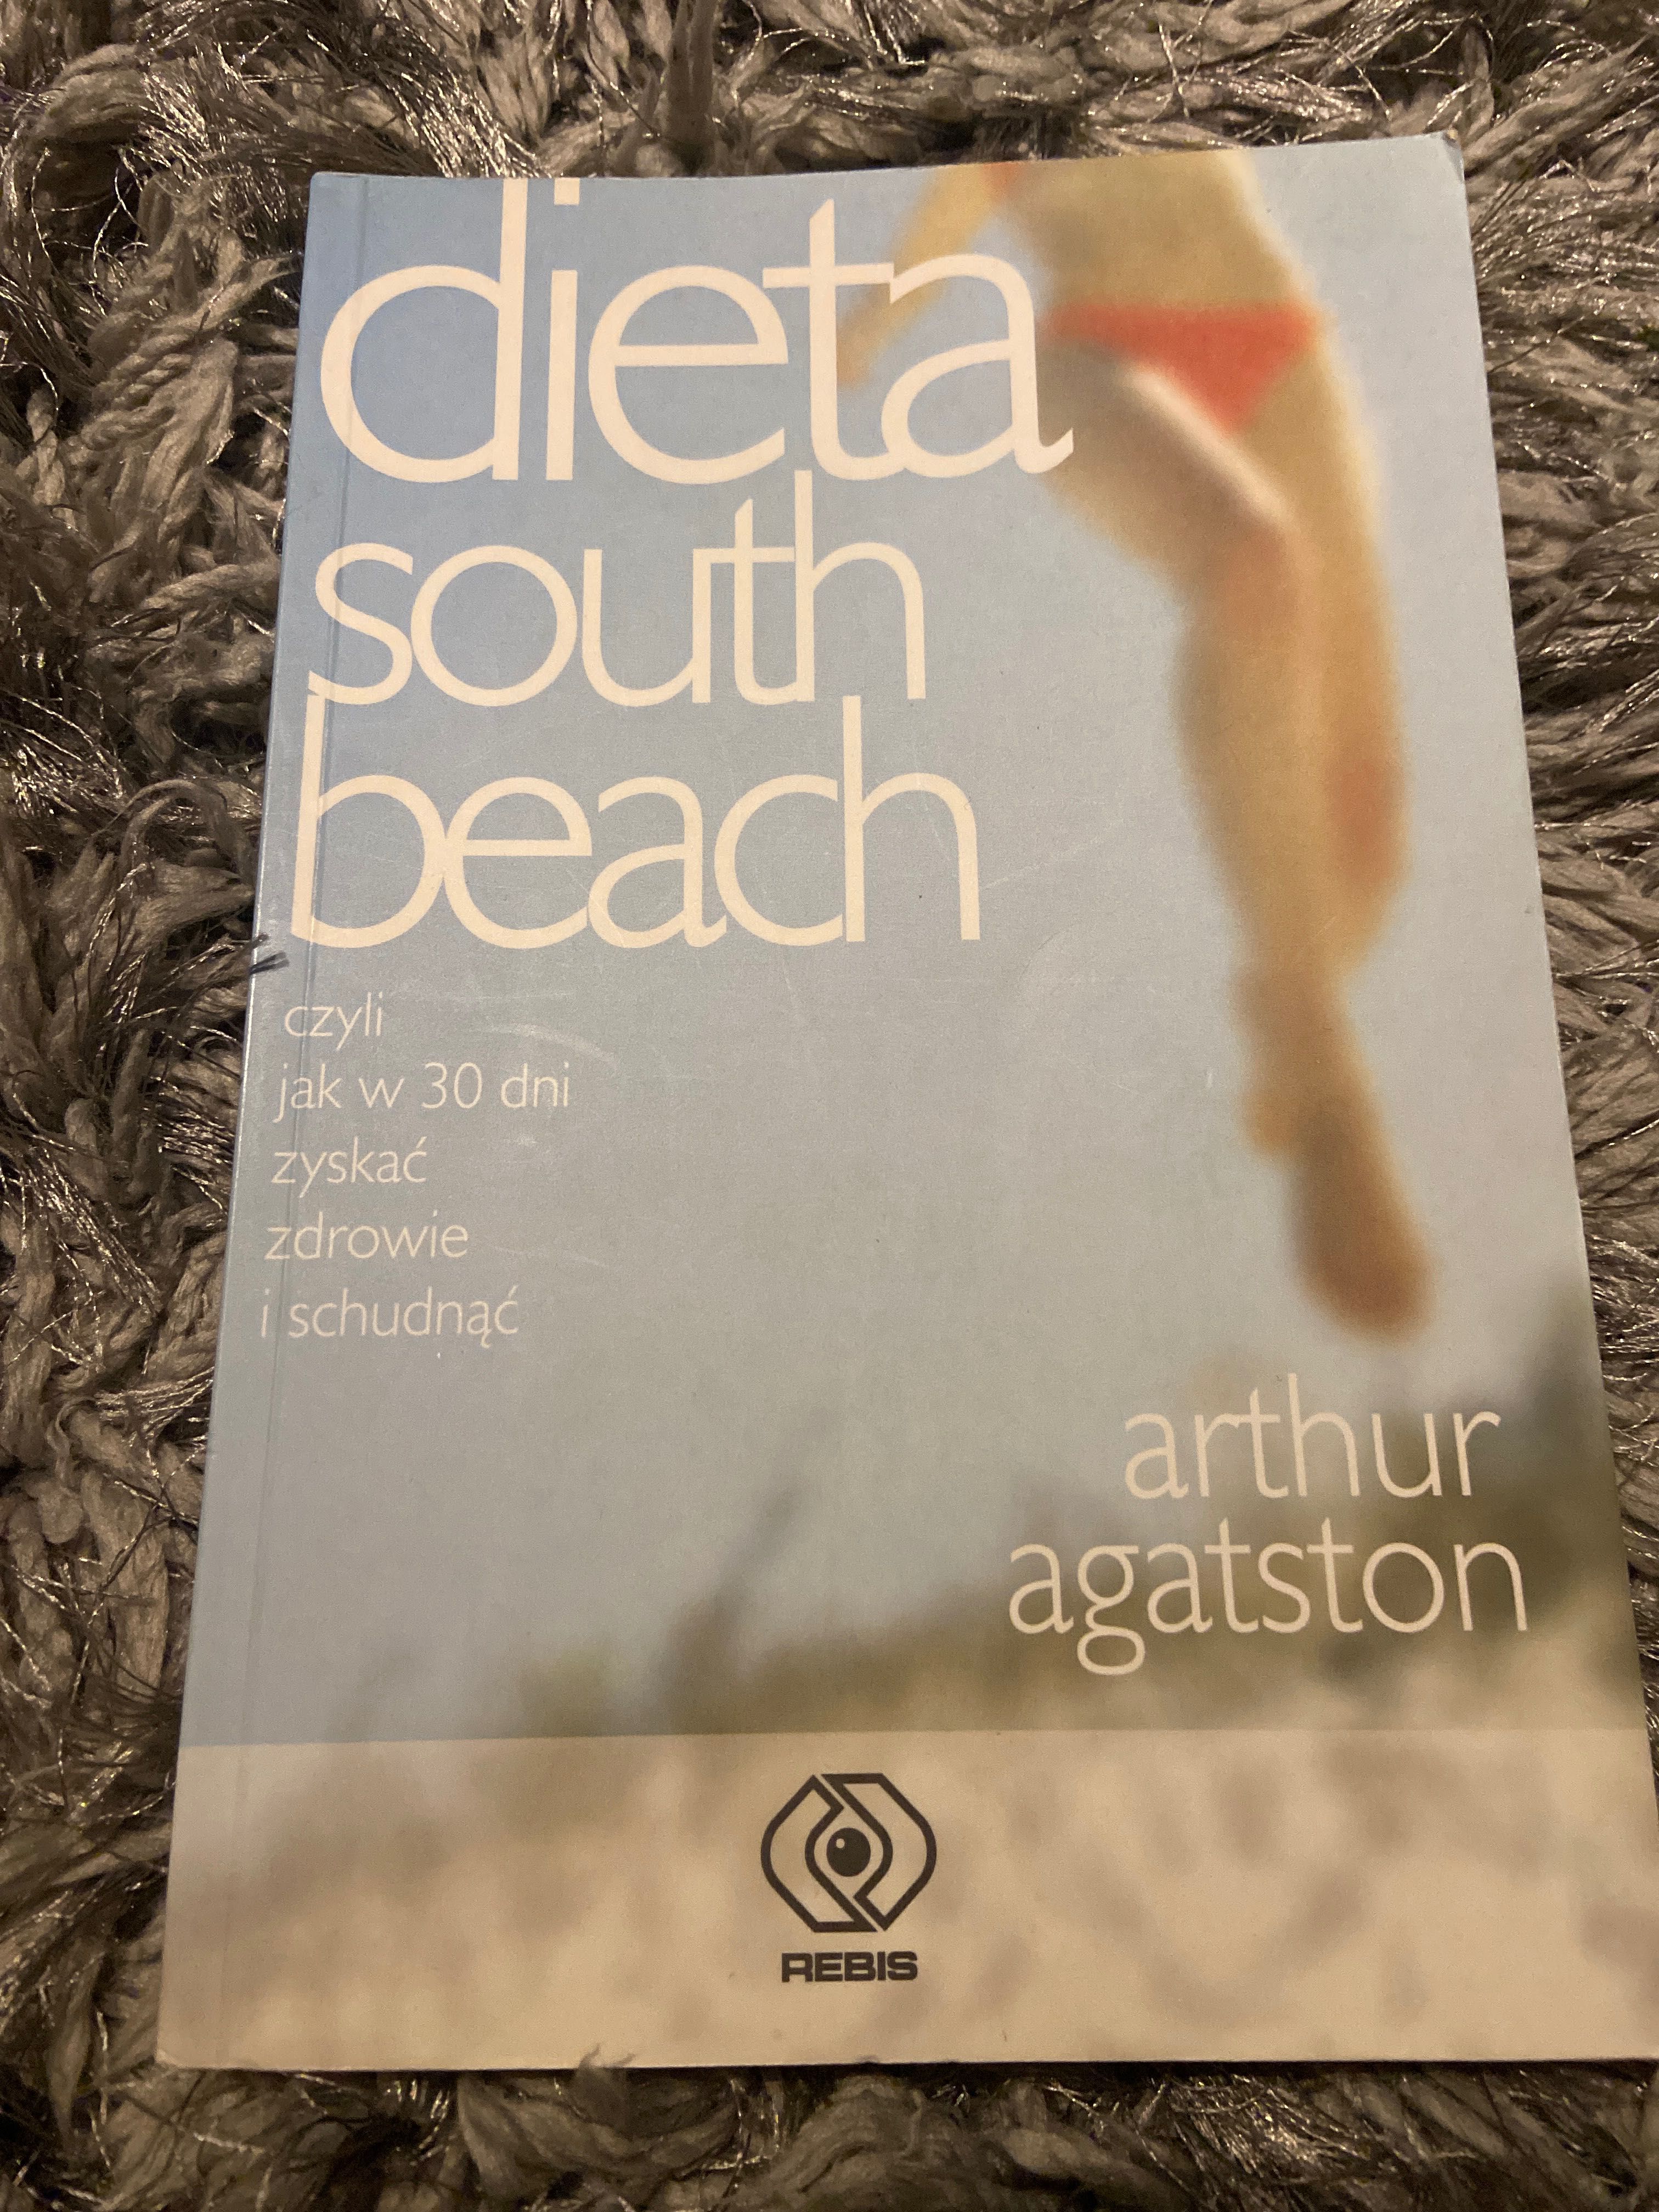 Dieta south beach - Arthur agatston